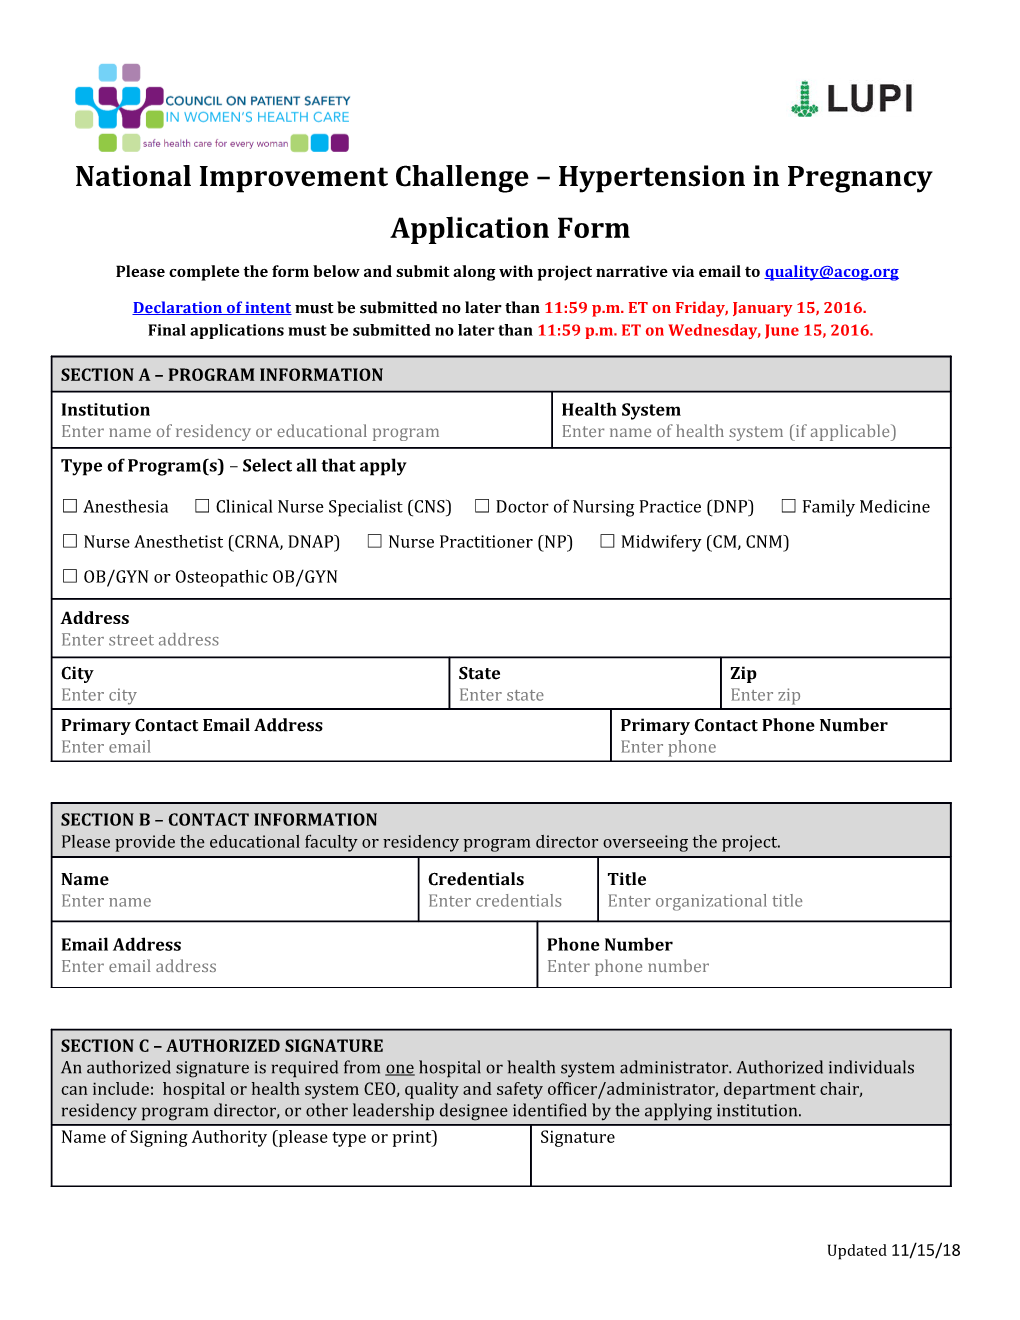 National Improvement Challenge Hypertension in Pregnancy